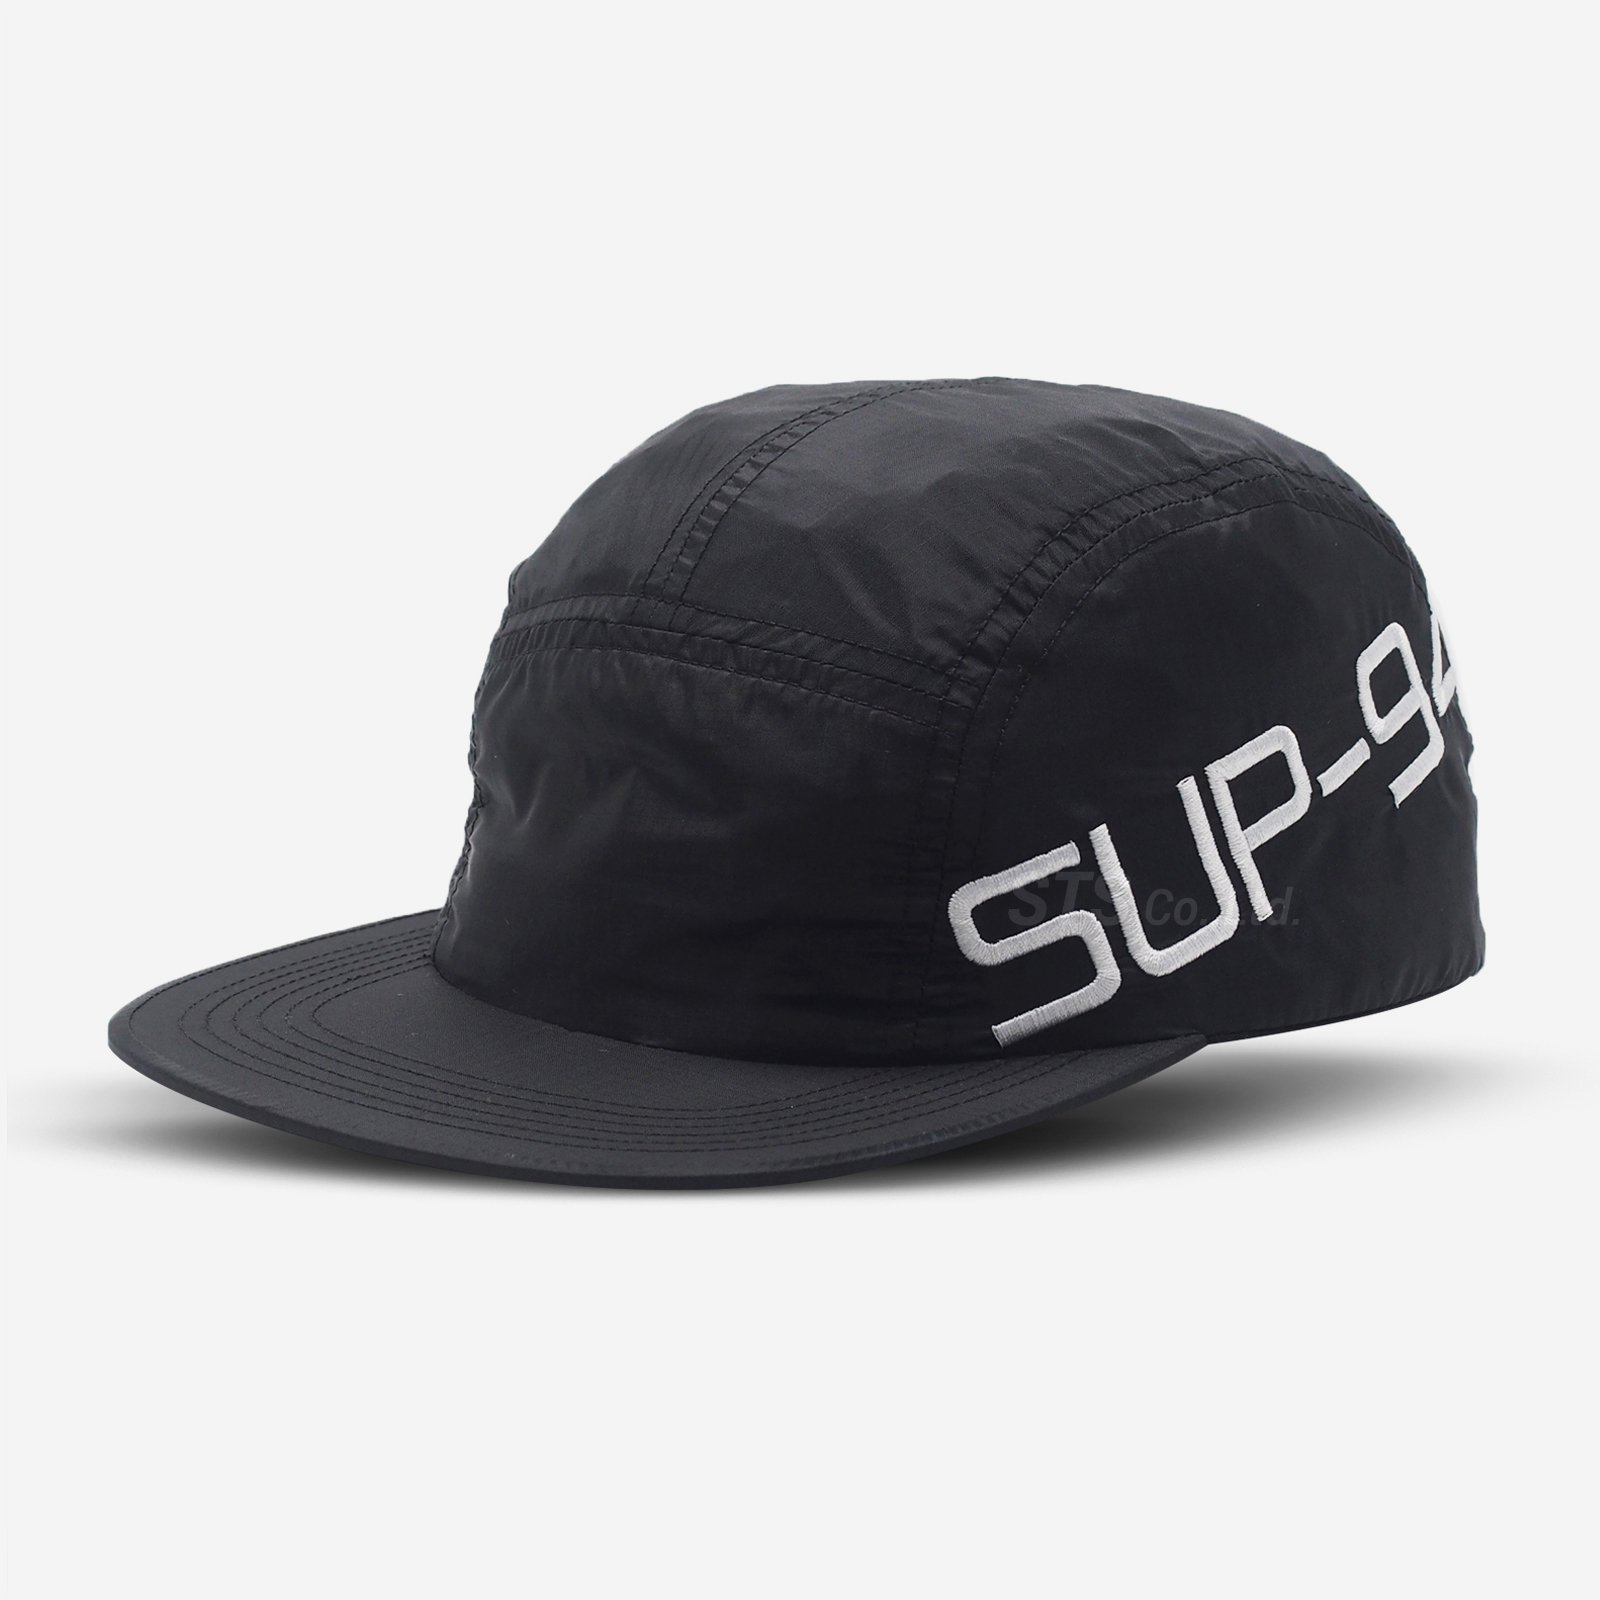 supreme cap side logo